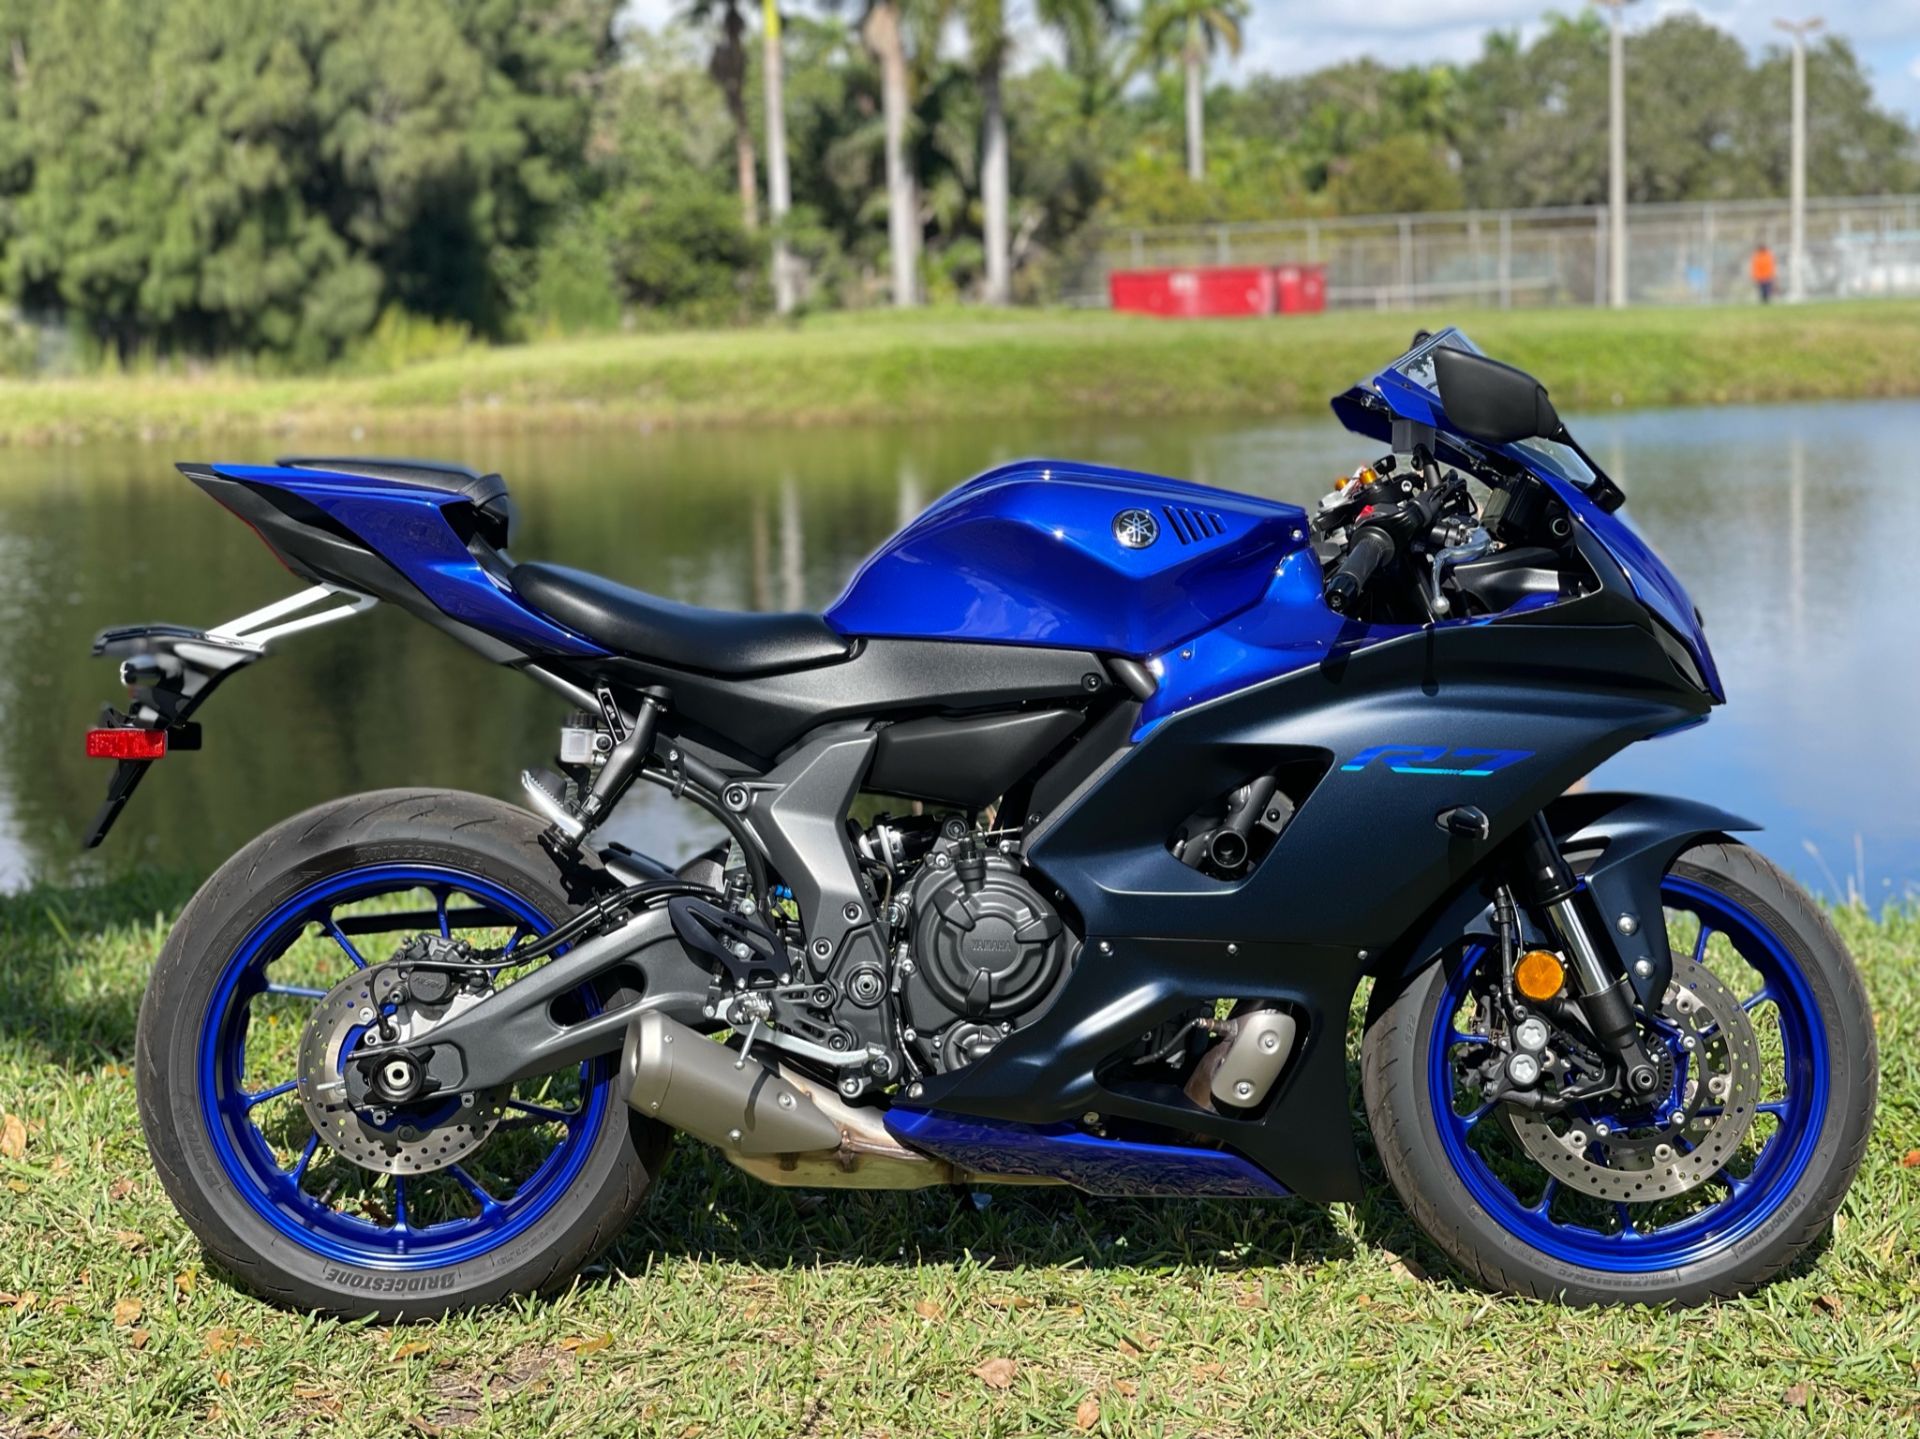 2022 Yamaha YZF-R7 in North Miami Beach, Florida - Photo 3